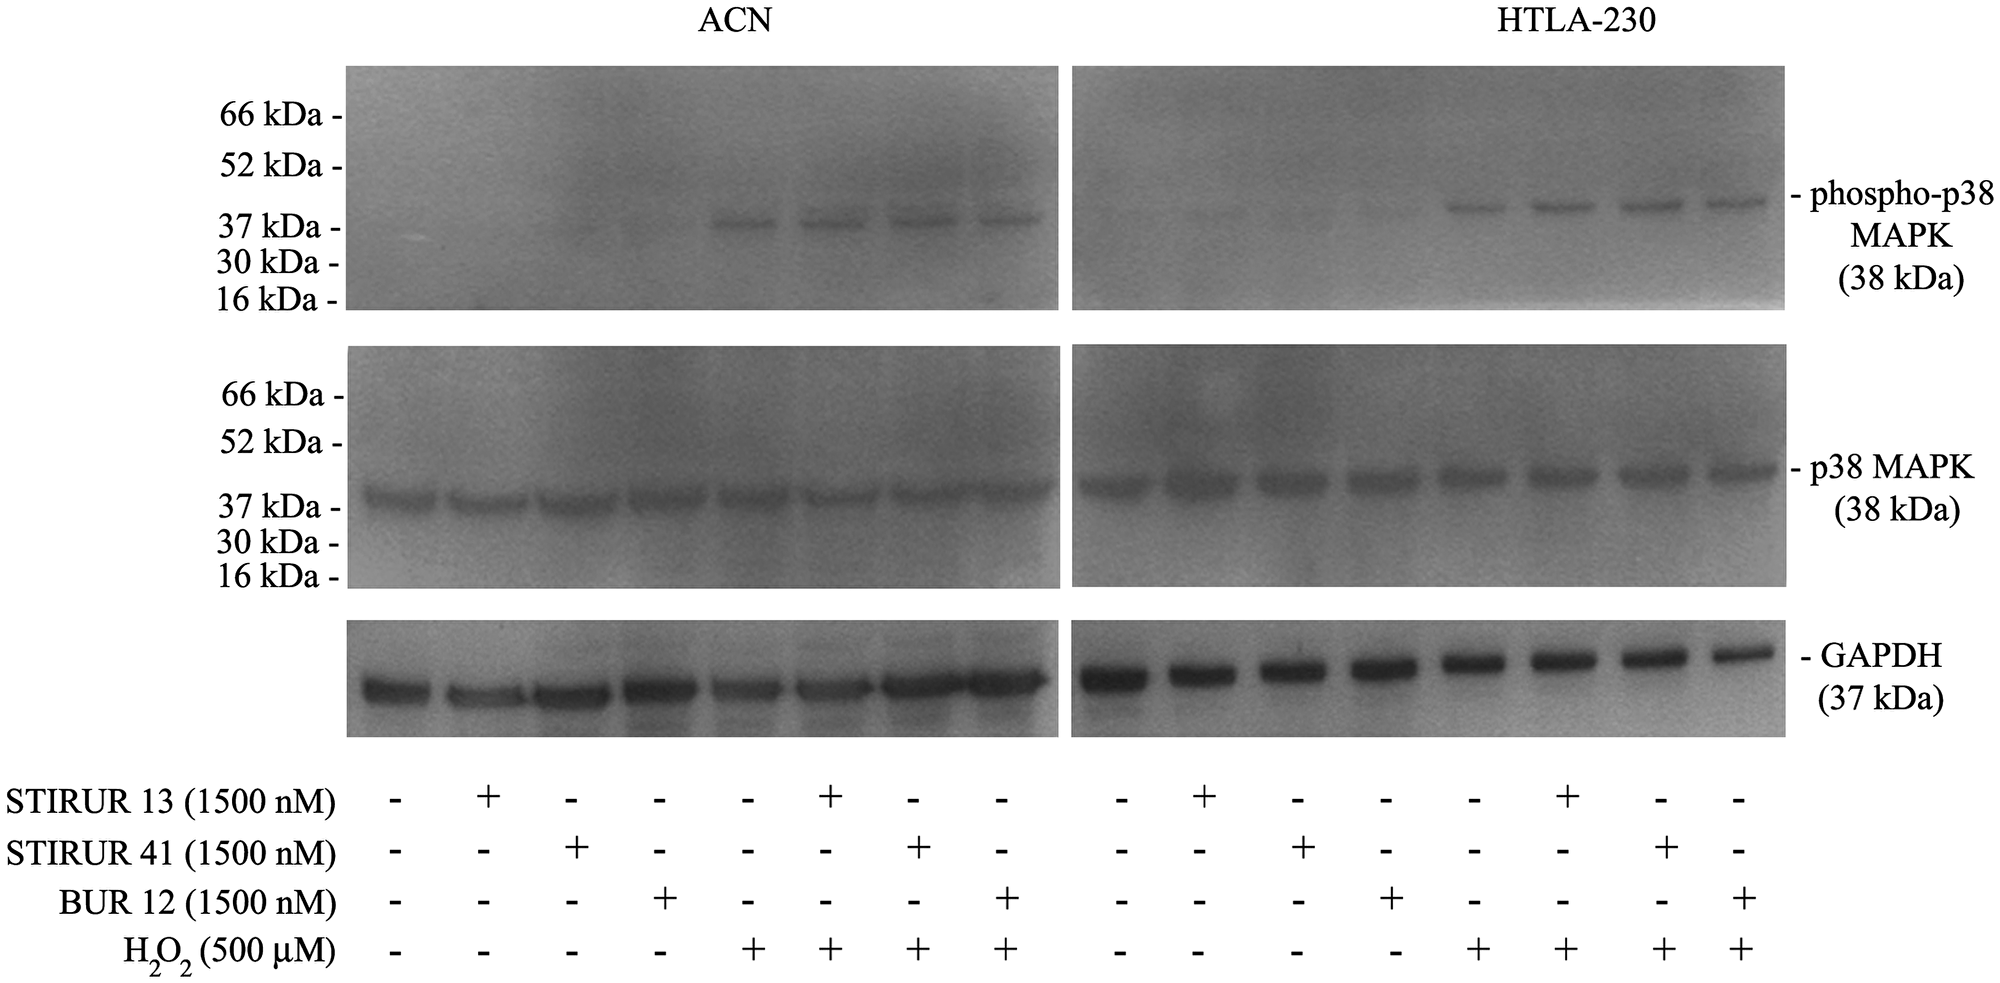 Effects of STIRUR 13, STIRUR 41 and BUR 12 on p38MAPK activation in ACN and HTLA-230 cells.